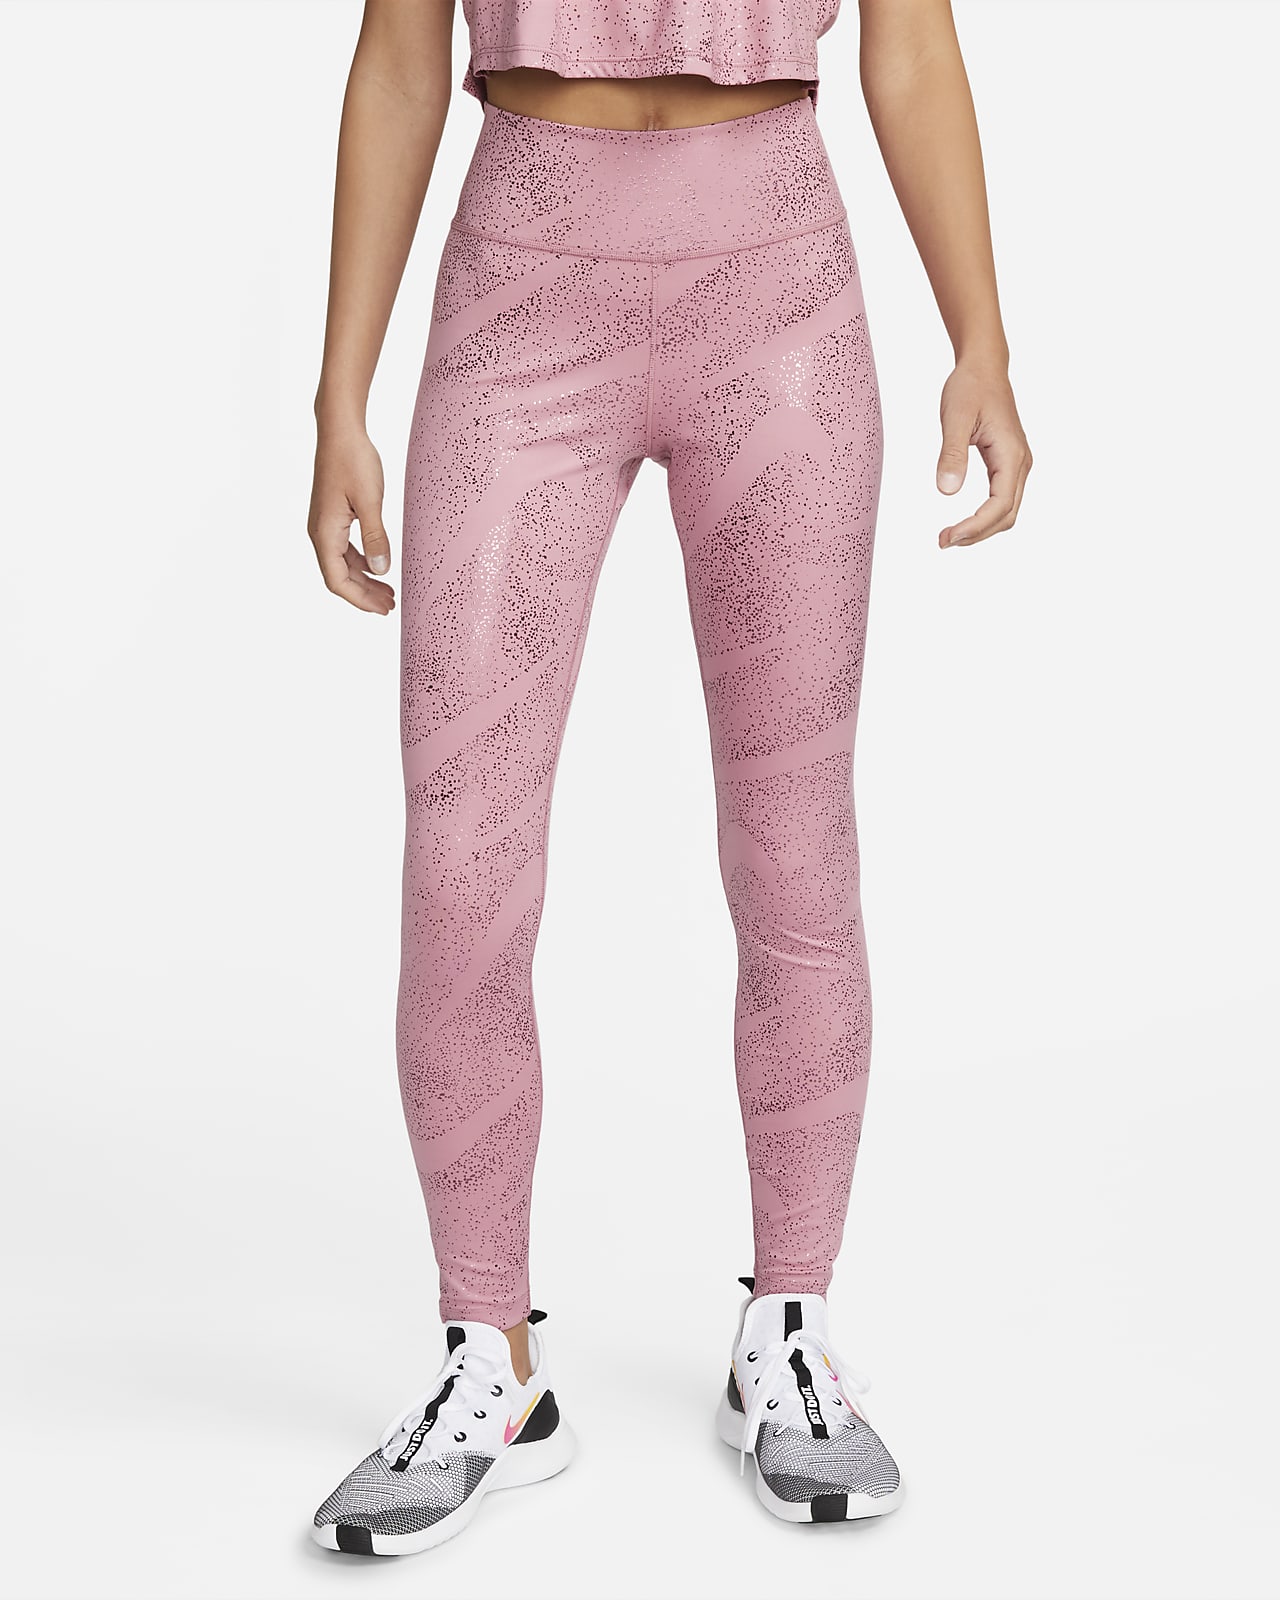 Nike One-leggings med print og mellemhøj talje til kvinder